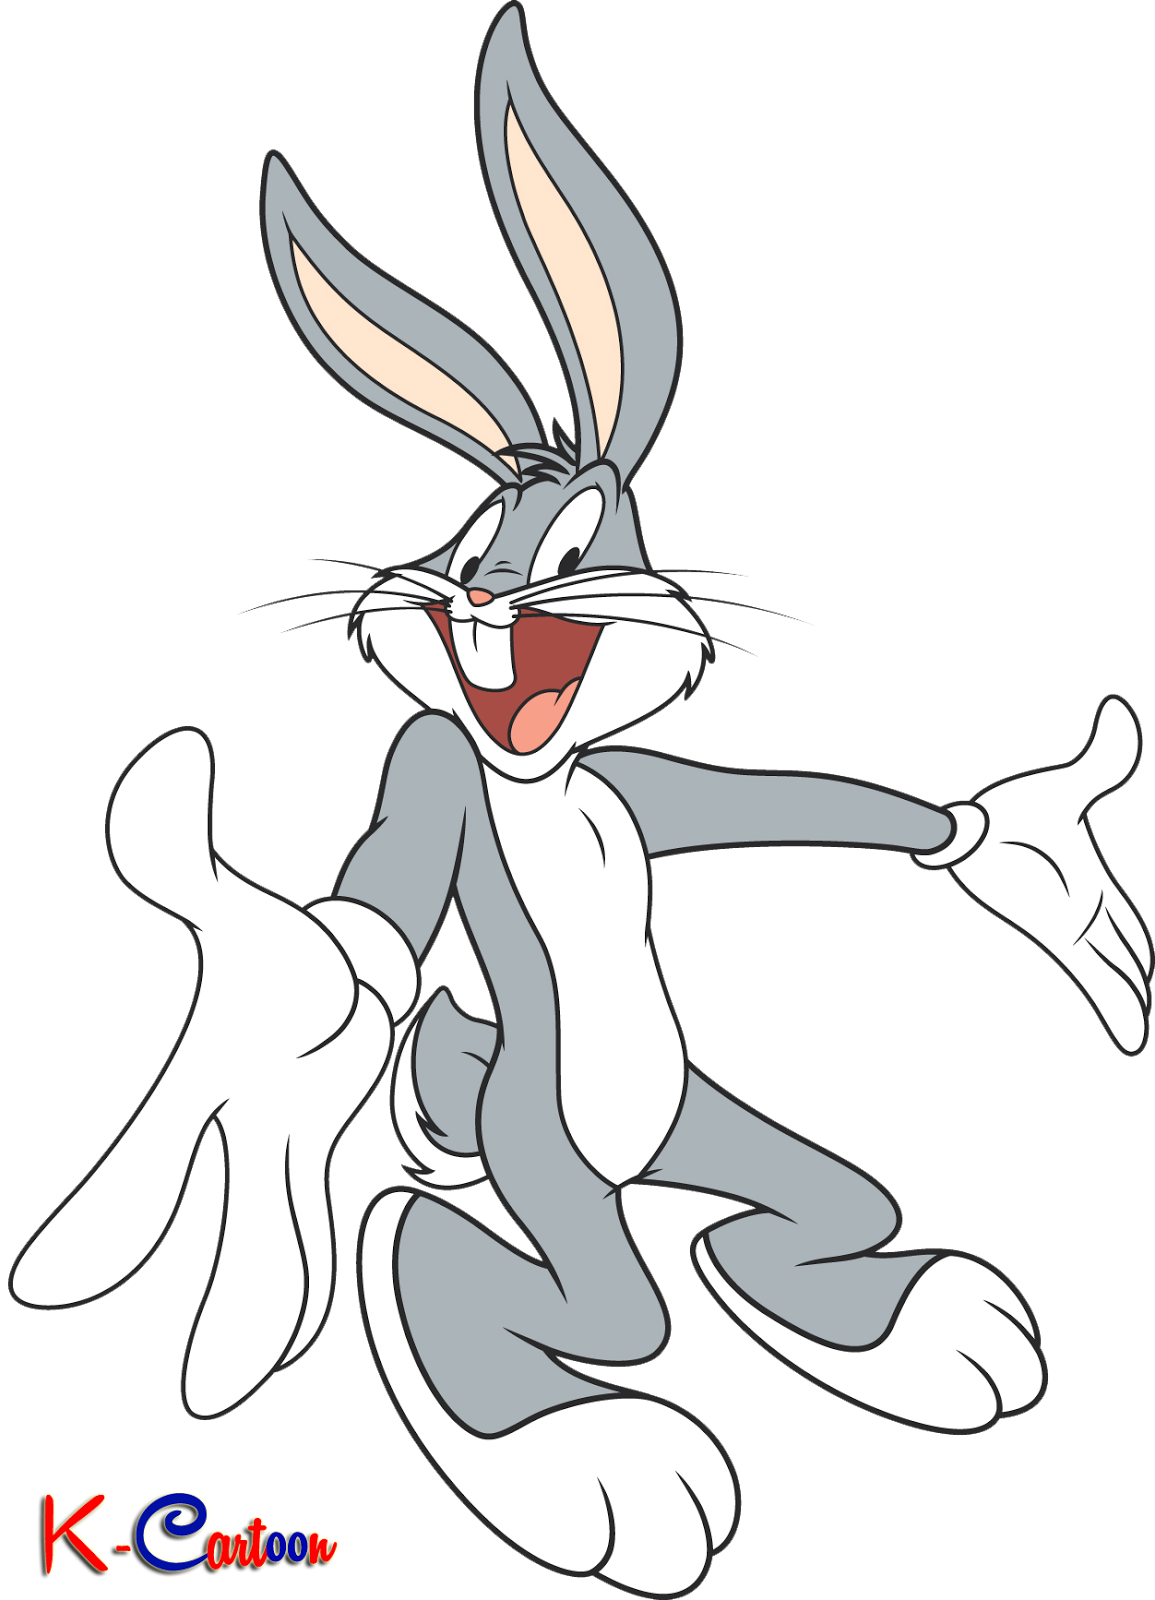 Gambar Gerak dan Vektor Bugs Bunny Terbaru Lucu Sangat - K 